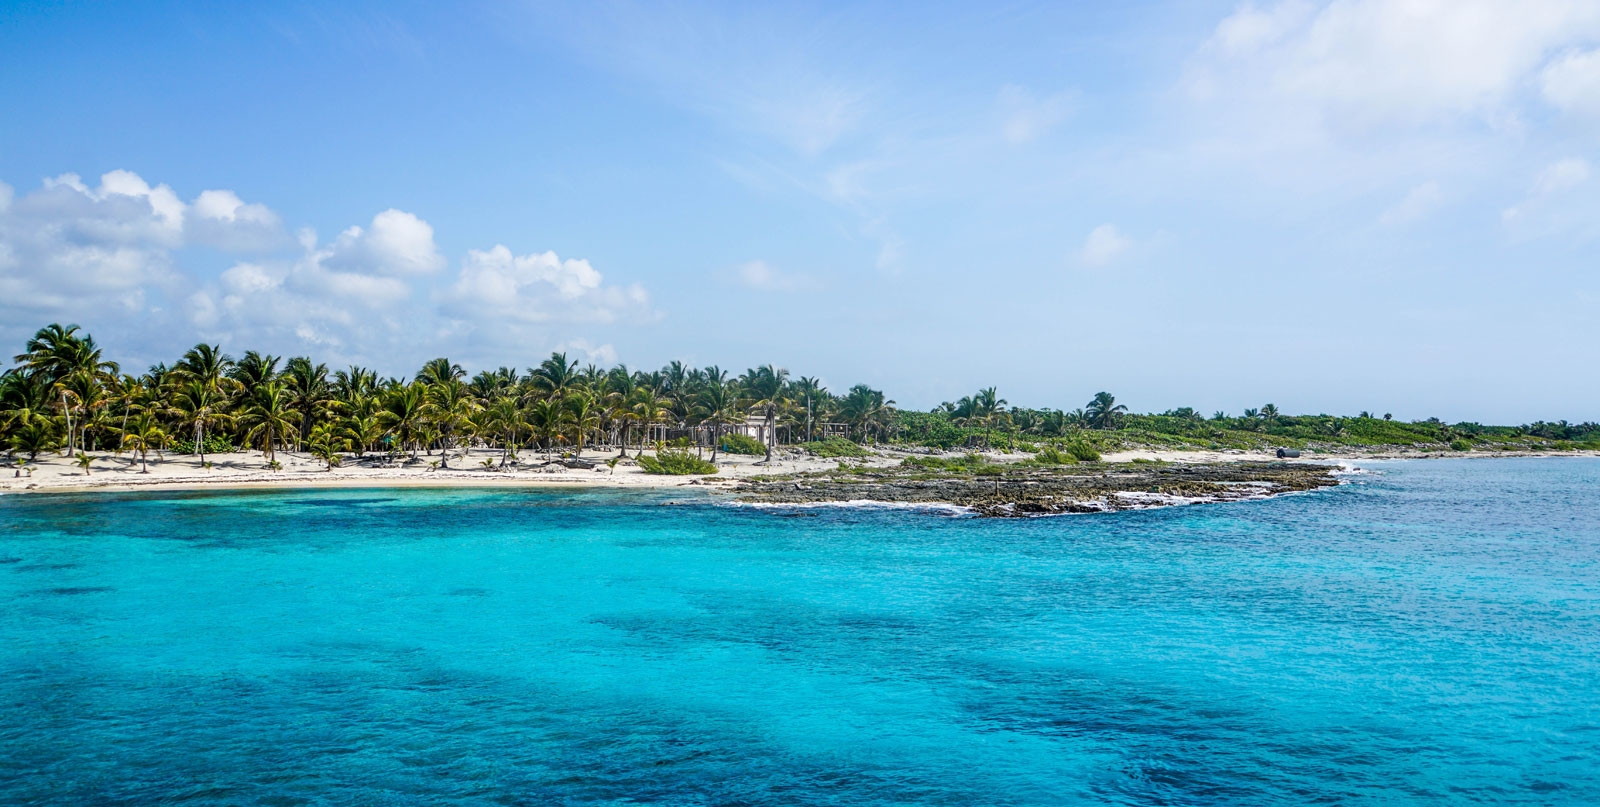 Paradise beaches of the Caribbean